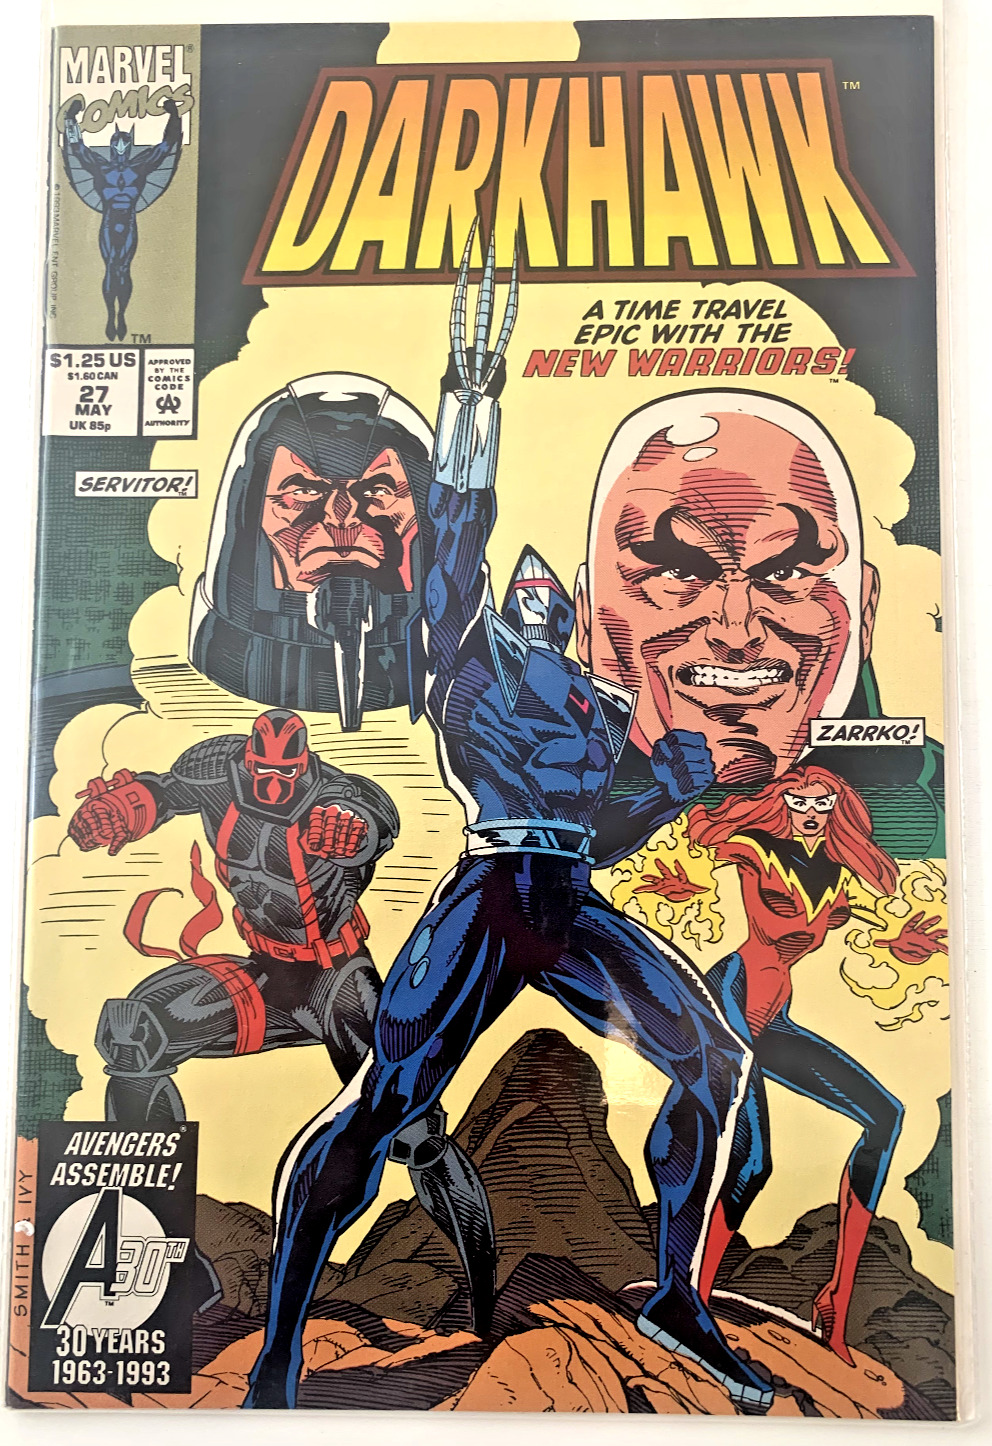 DARKHAWK-MARVEL-VOL 1 ISSUE  #27 MAY 1993